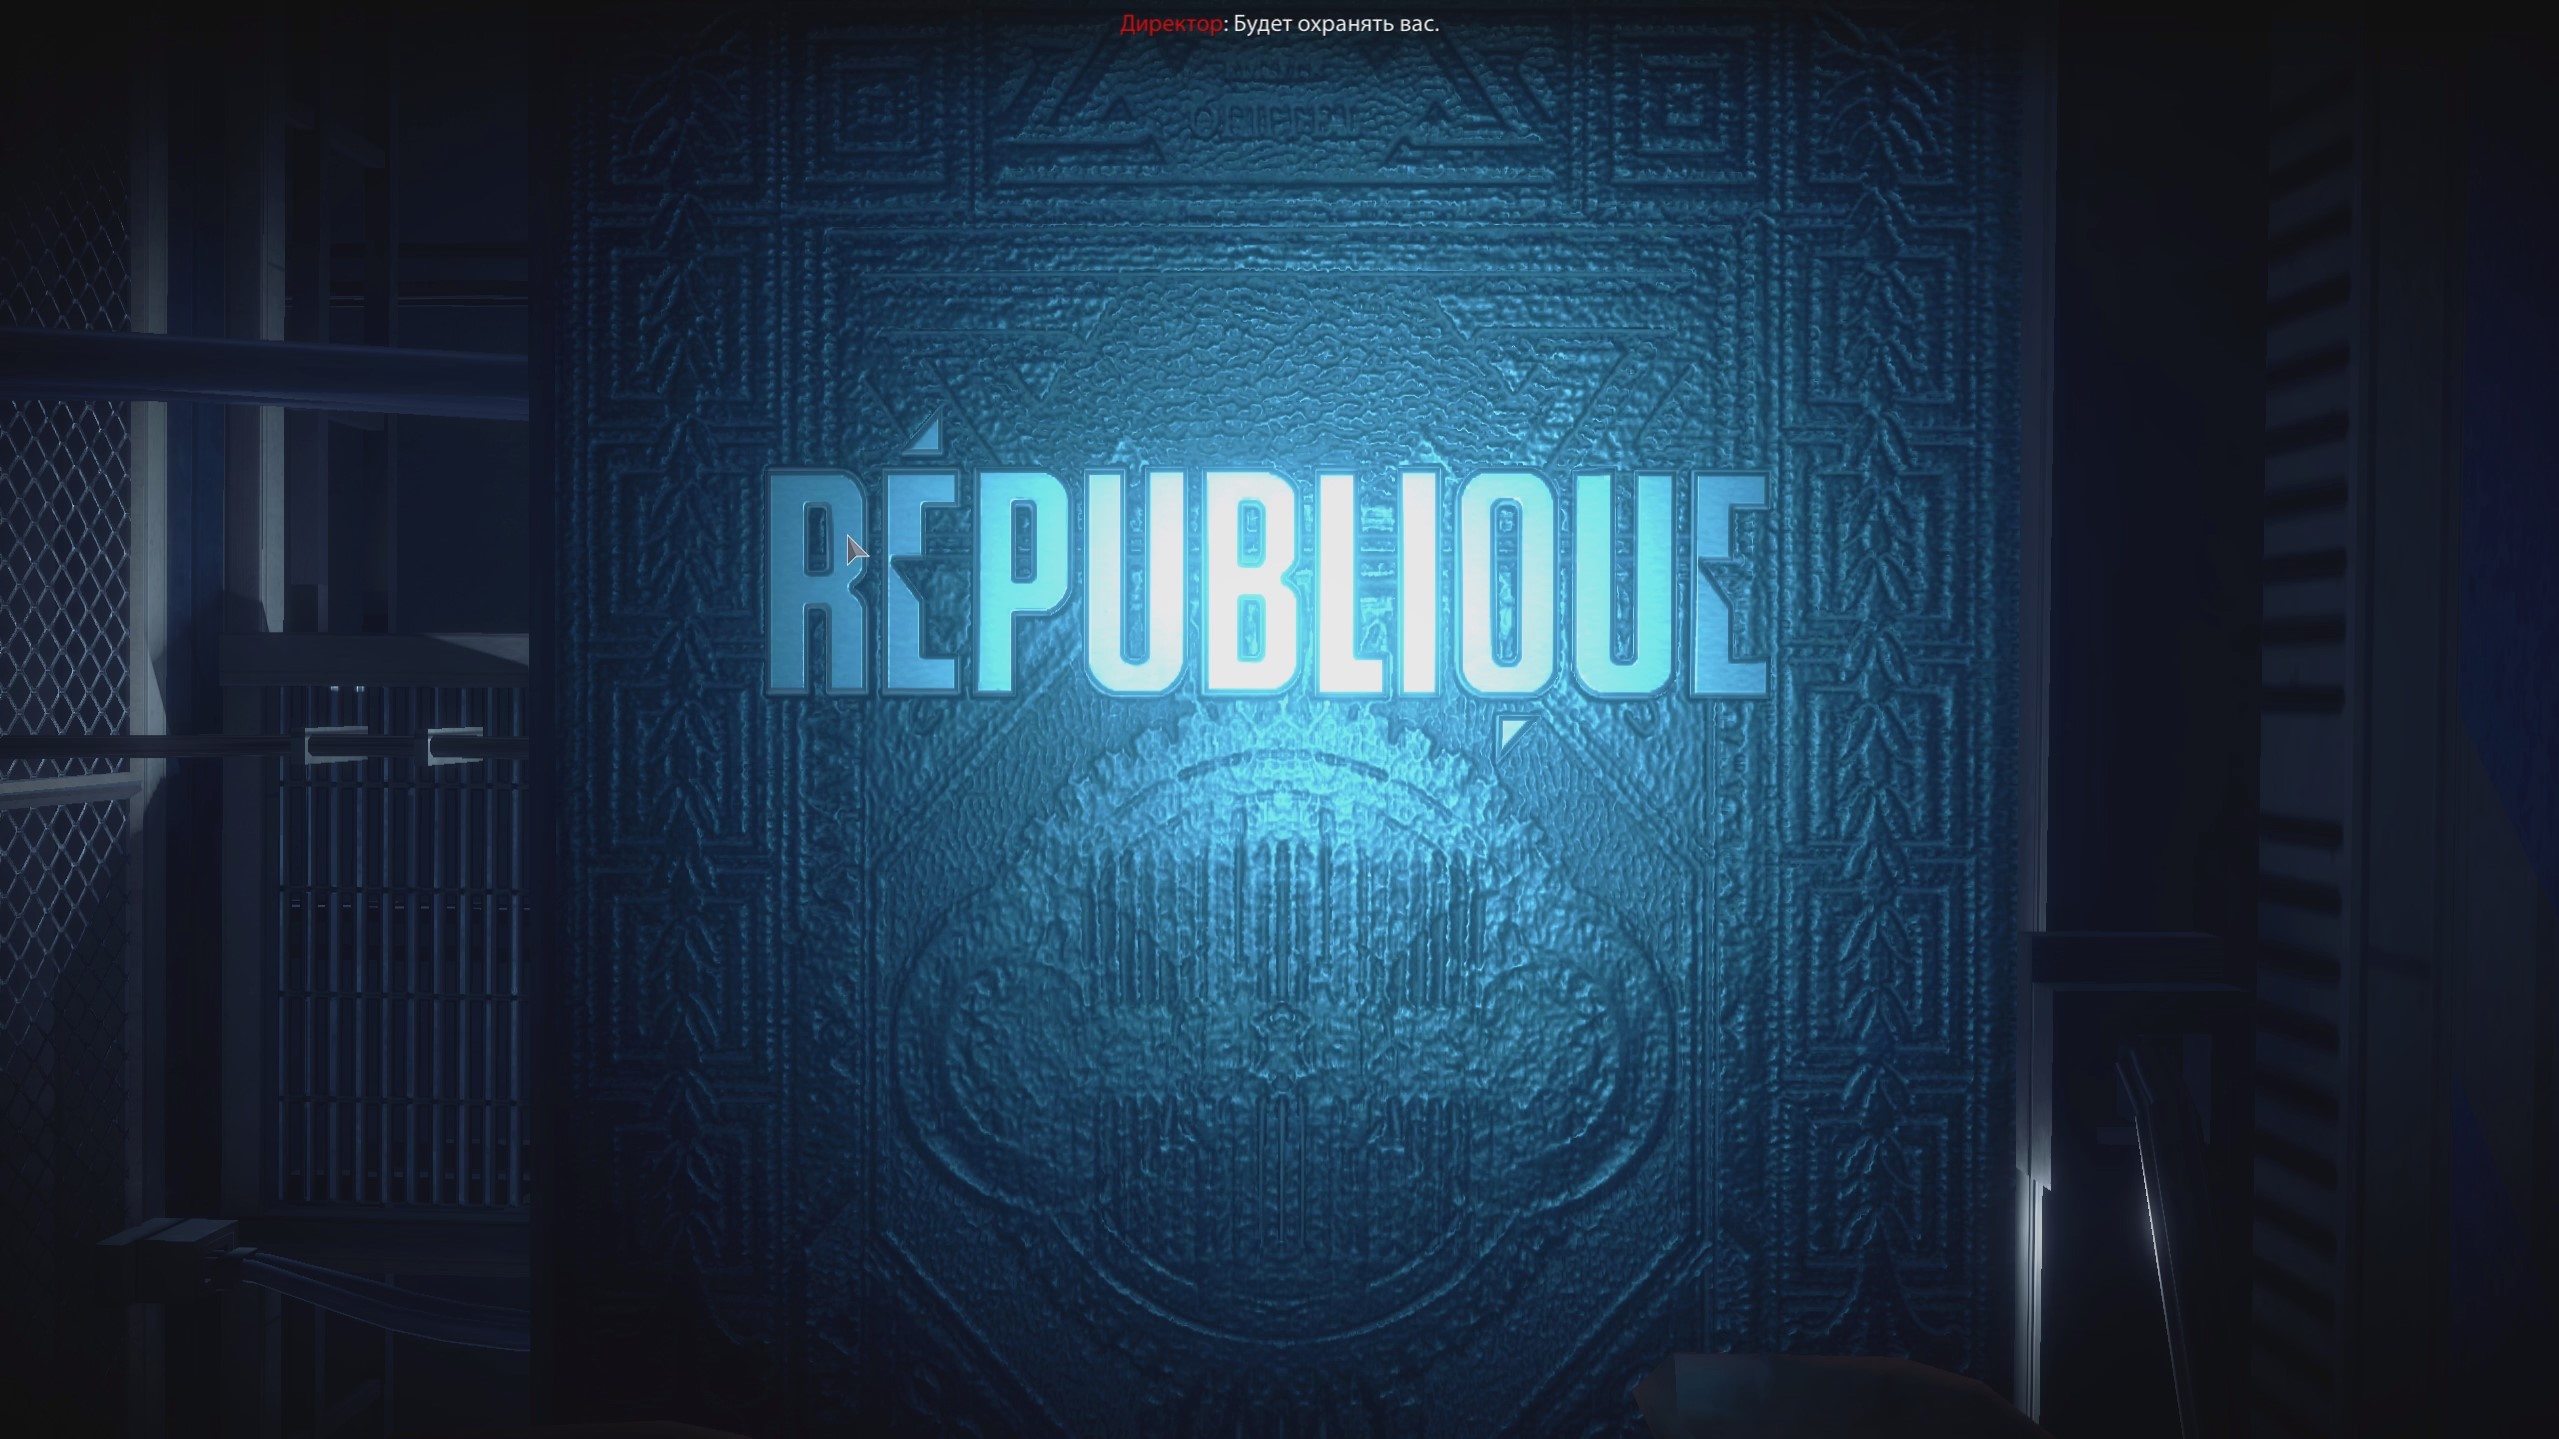 Republique - Эпизод 1. Начало побега.